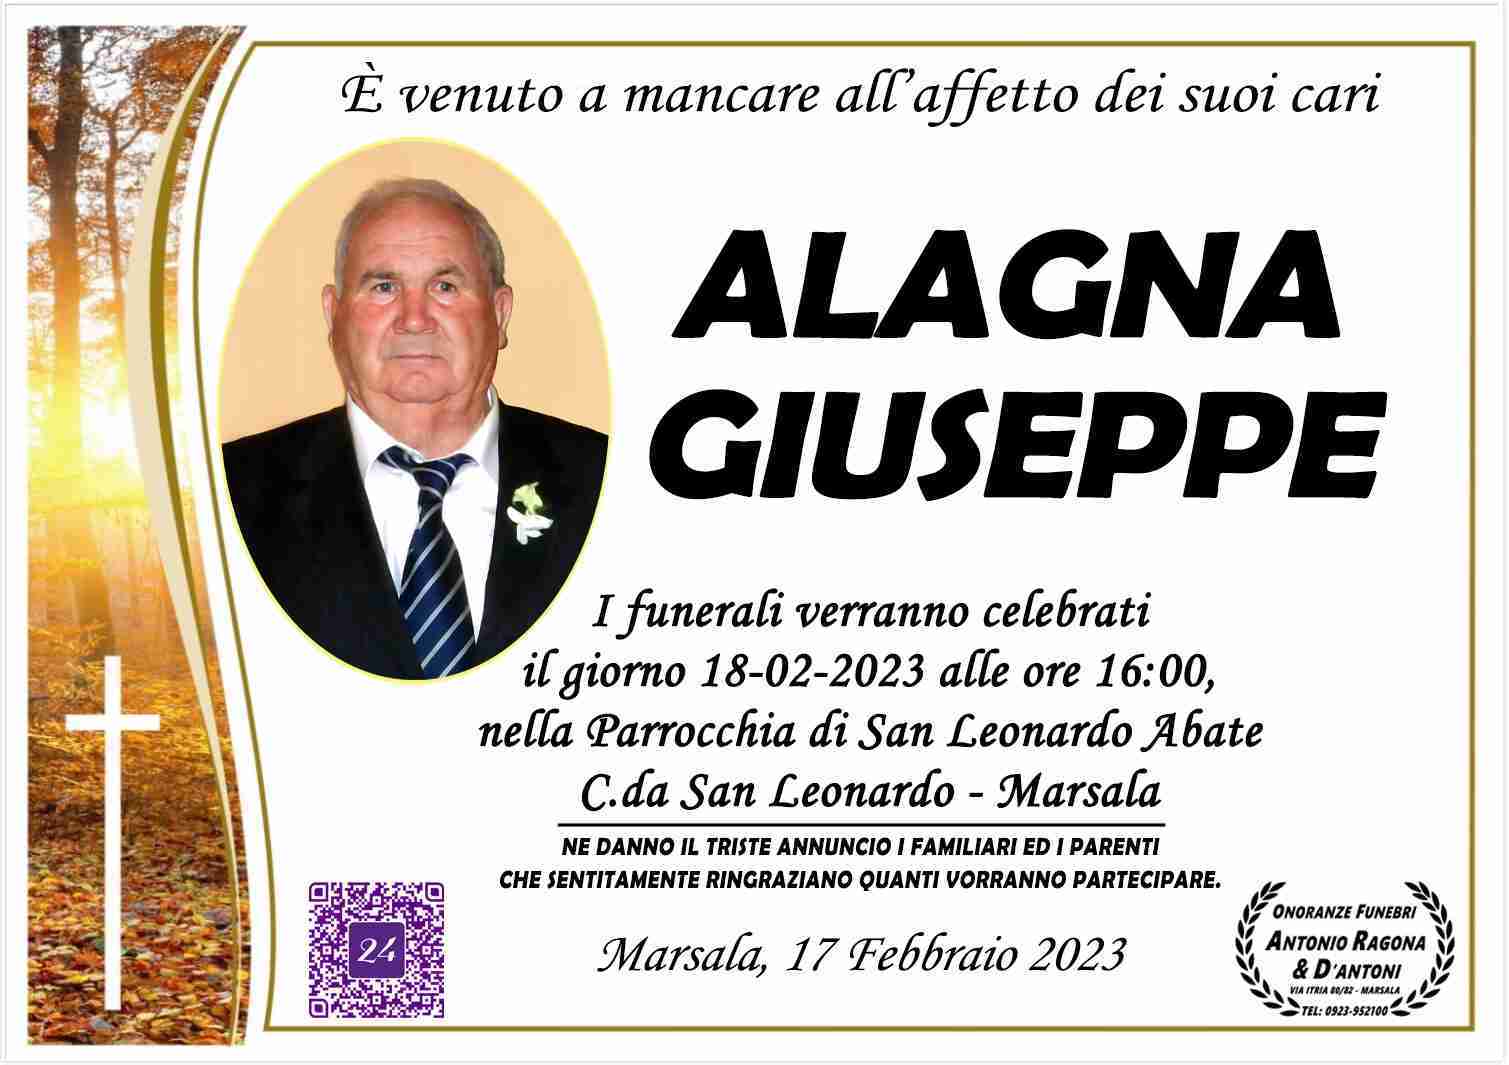 Giuseppe Alagna